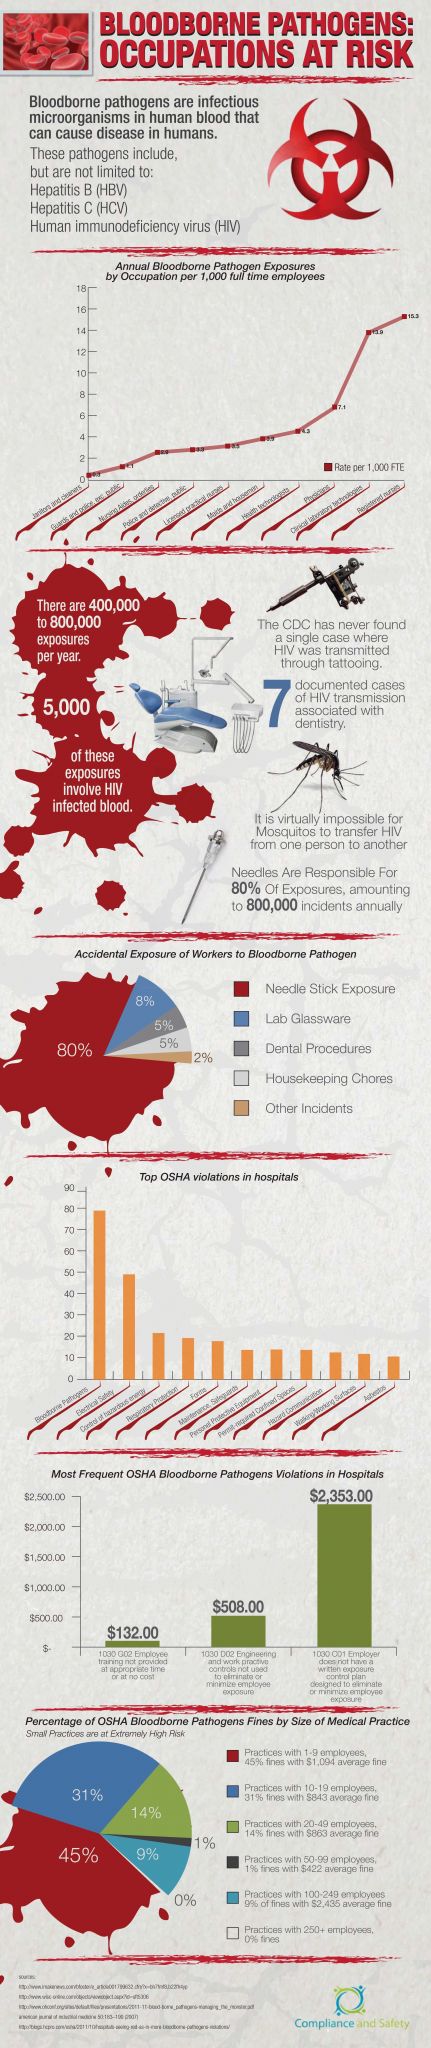 Bloodborne Pathogens Worksheet Along with Bloodborne Pathogens Occupations at Risk Infographic